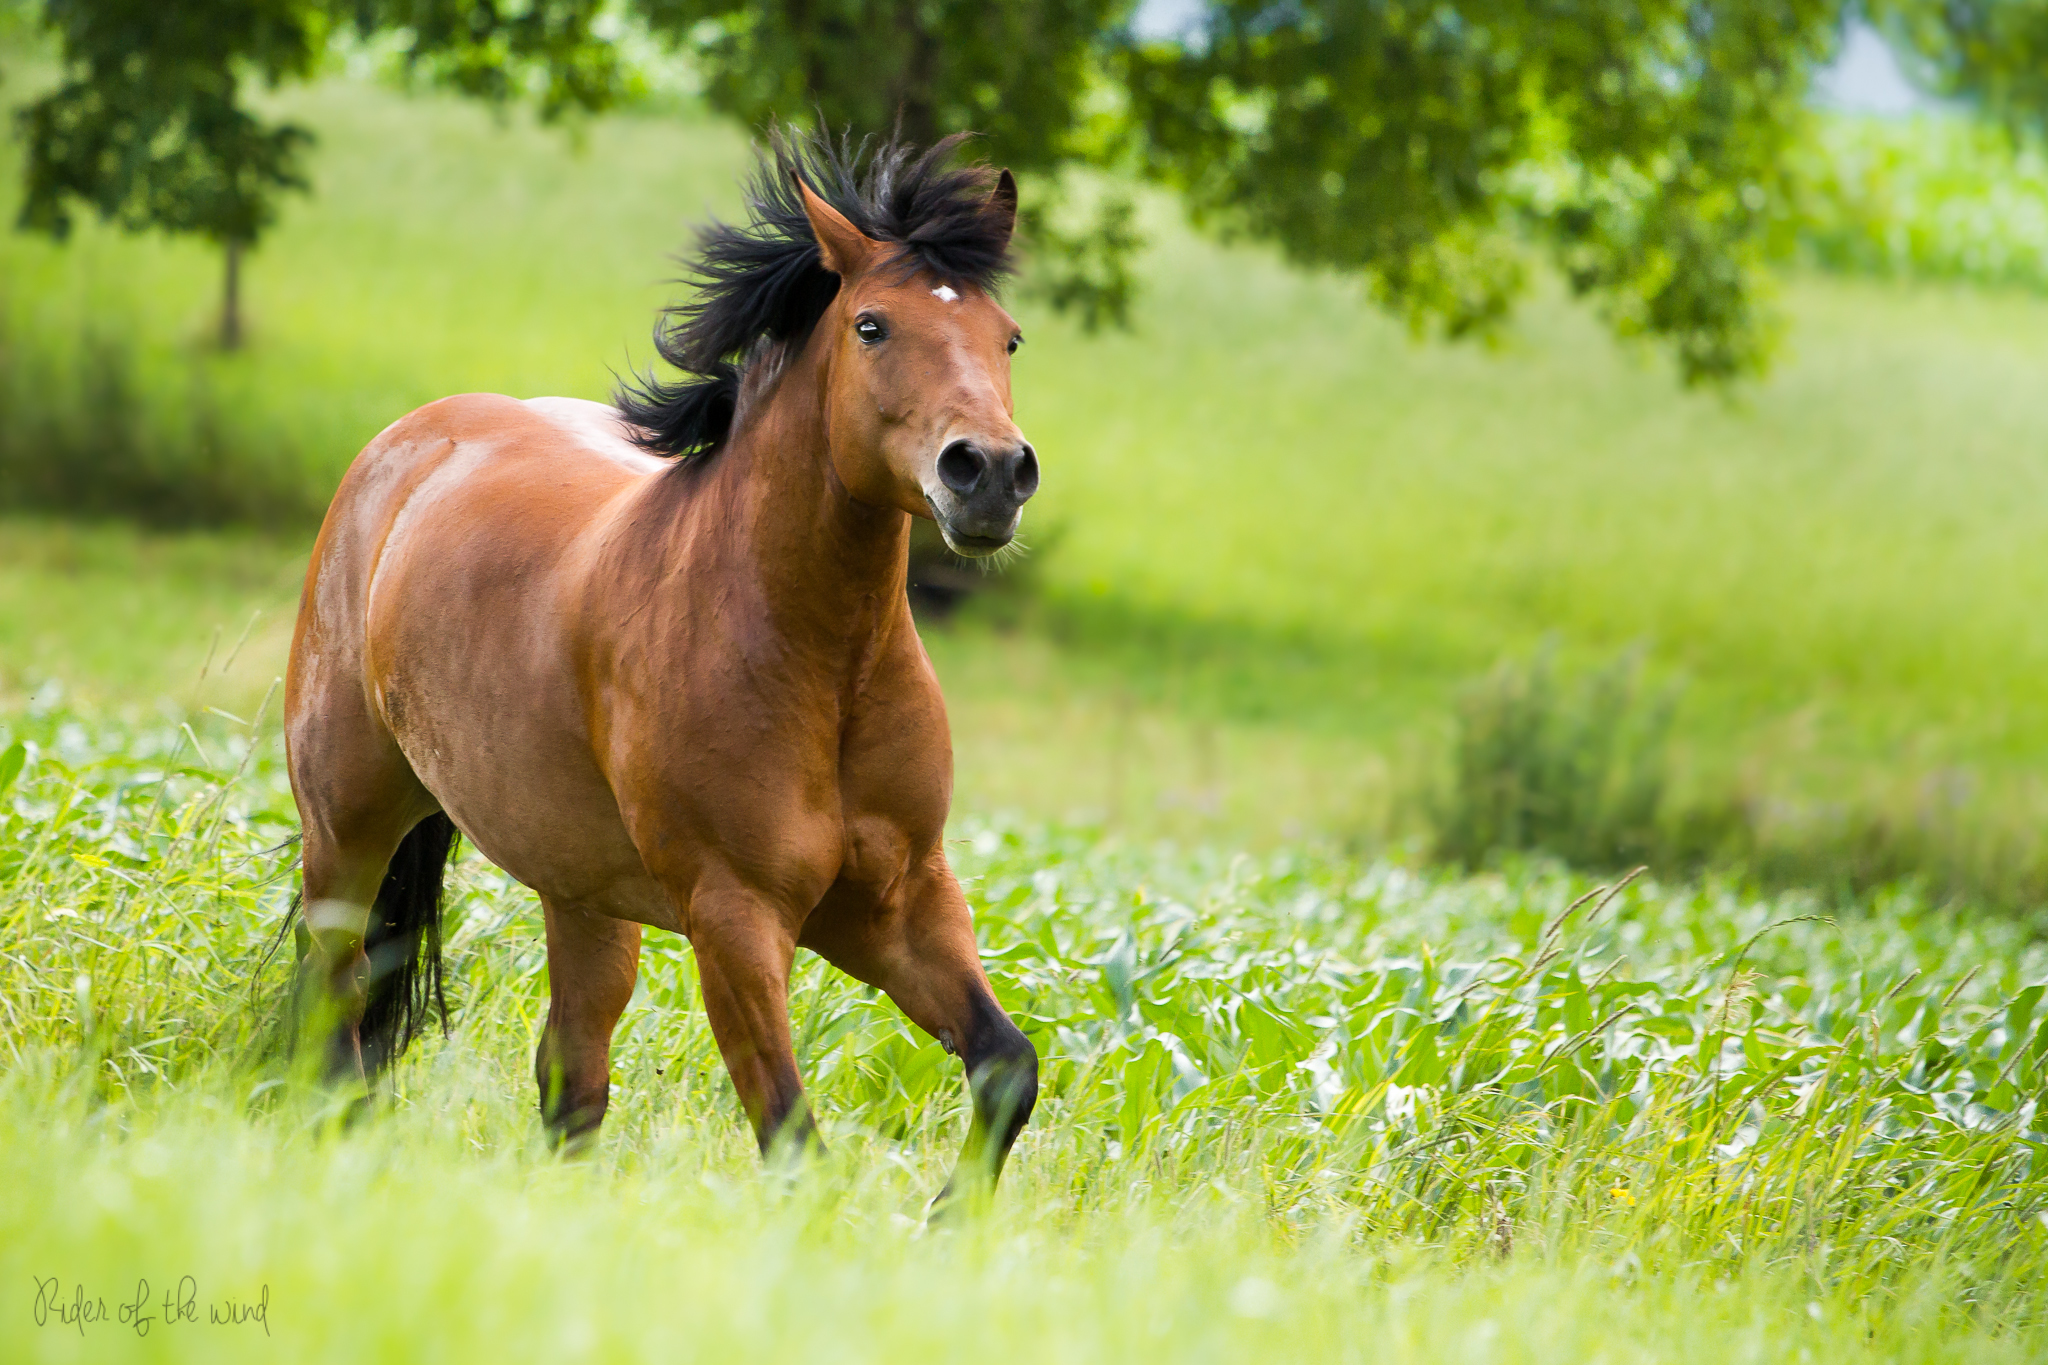 Horse pictures. Красивые лошади. Картинки лошадей. Картинки лошадей красивые. Лошади на природе.